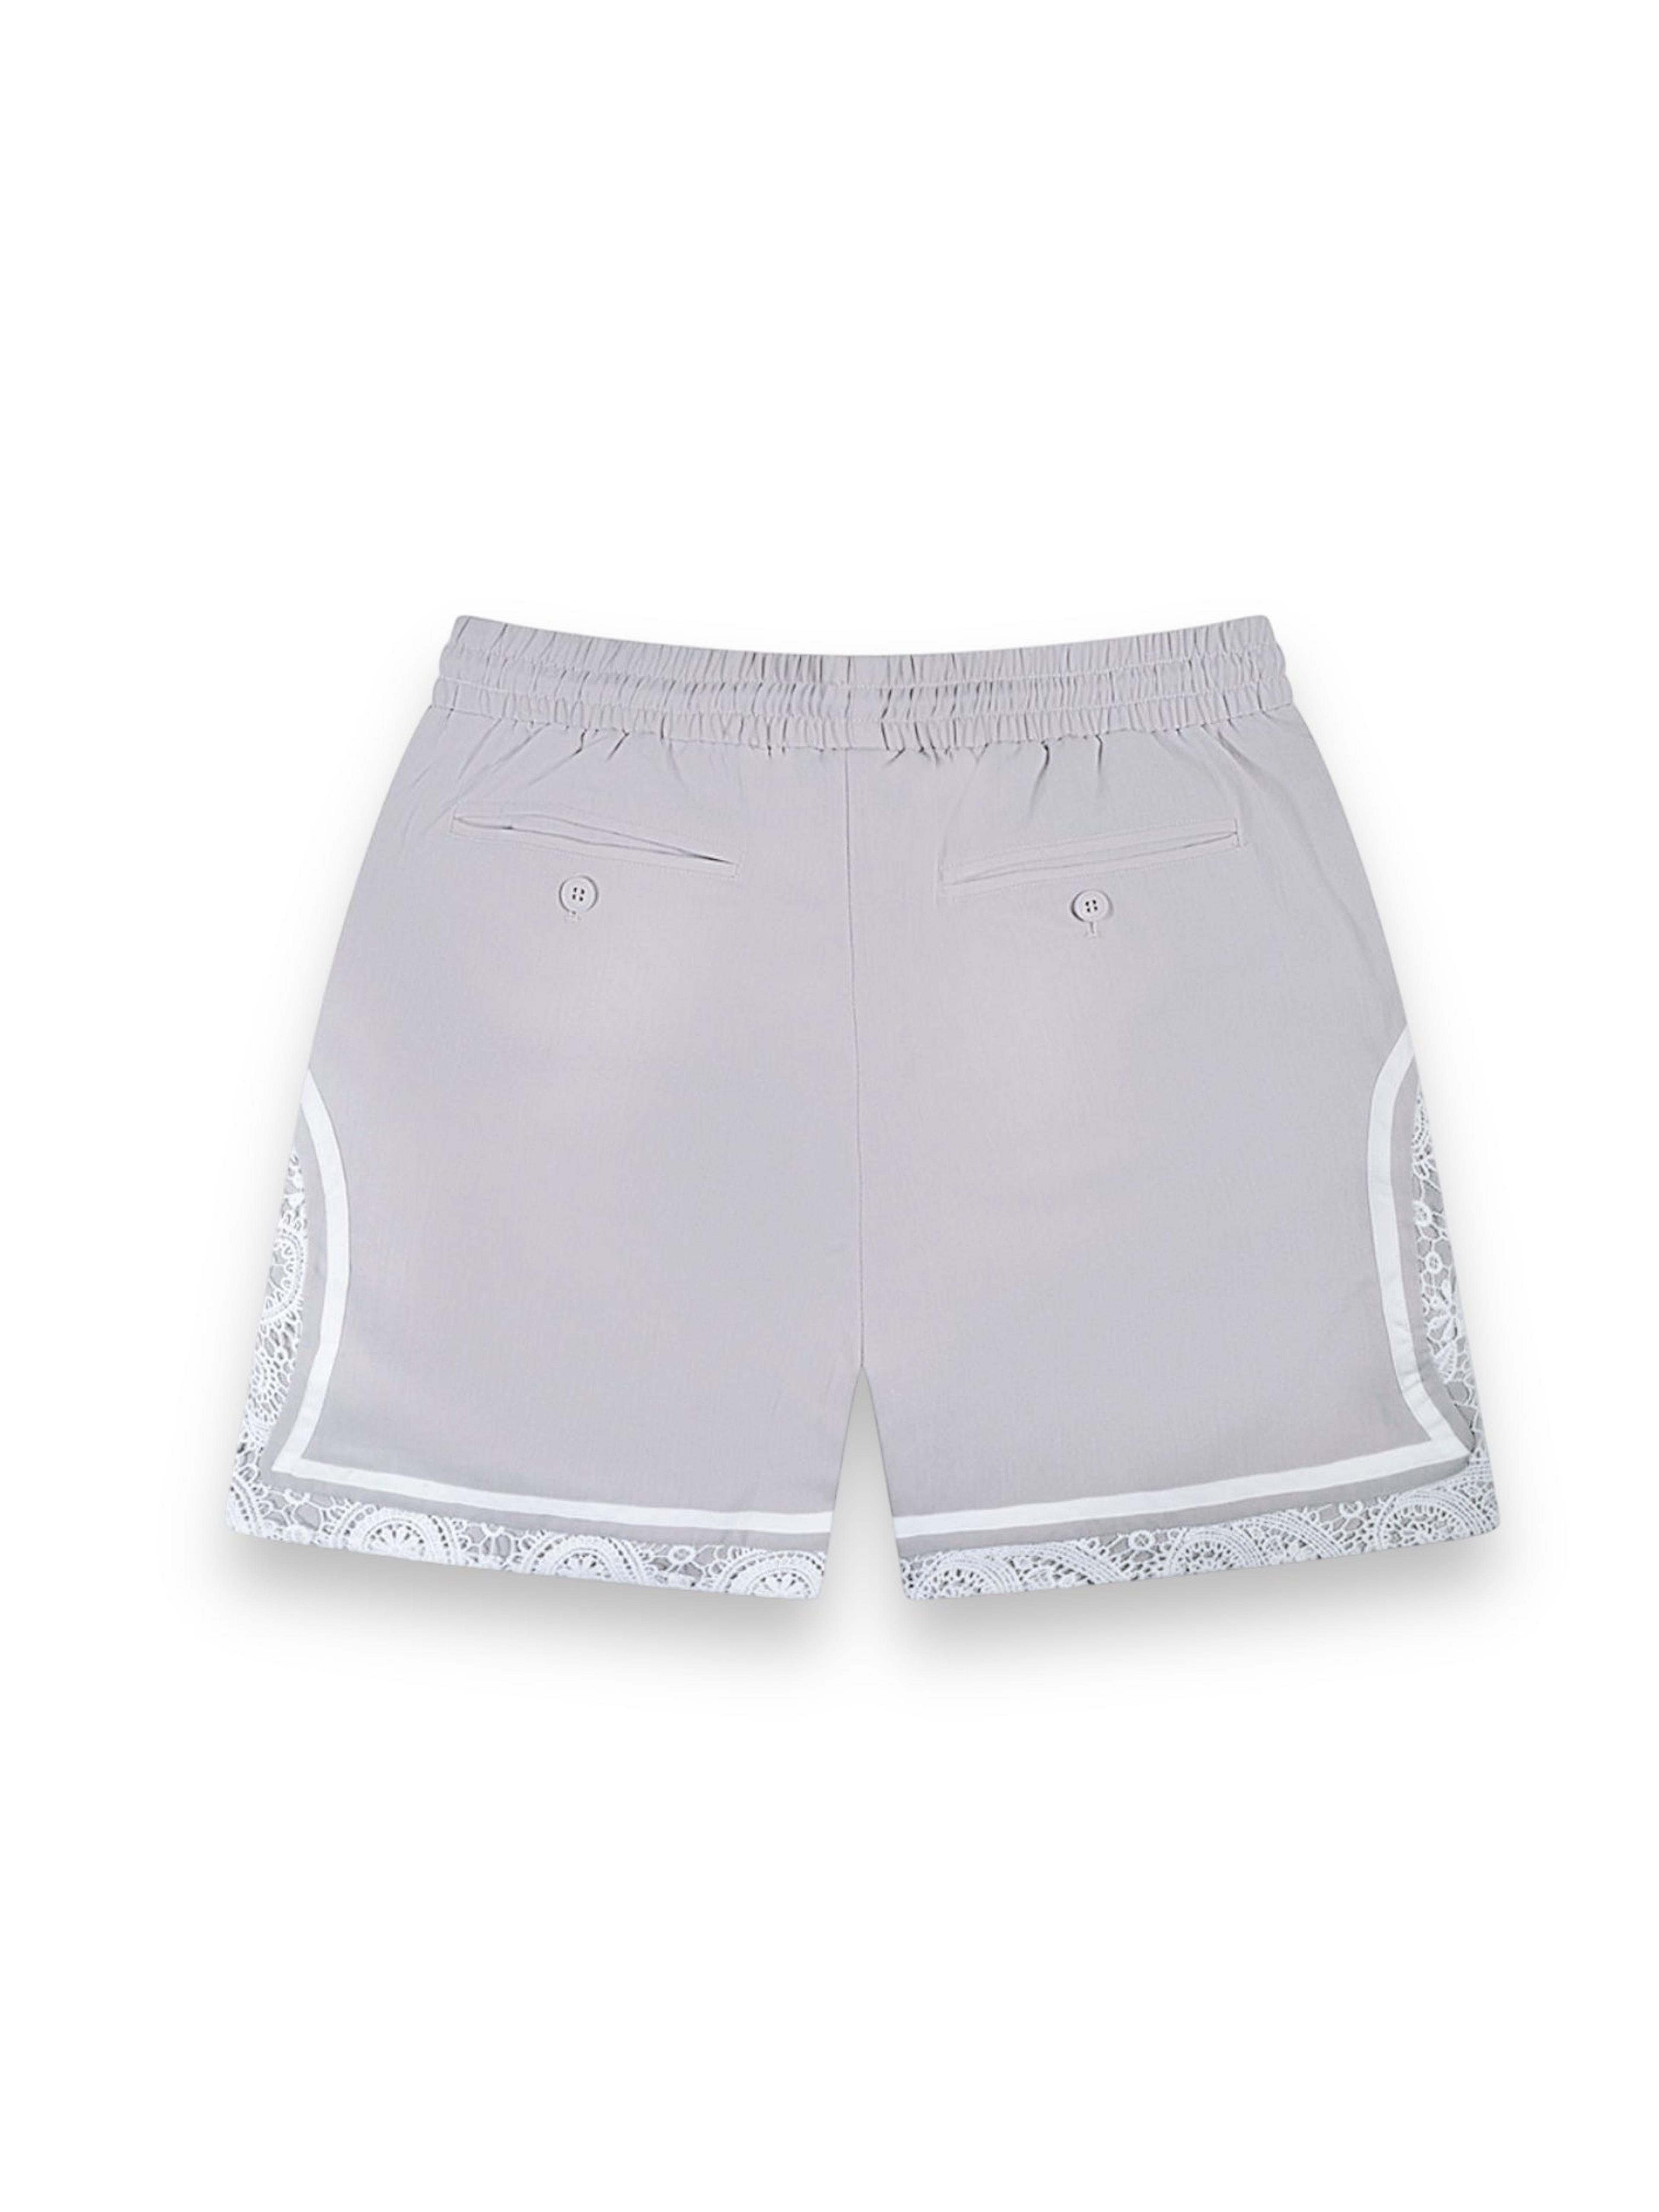 Alternate View 3 of Grey Paisley Linen Shorts